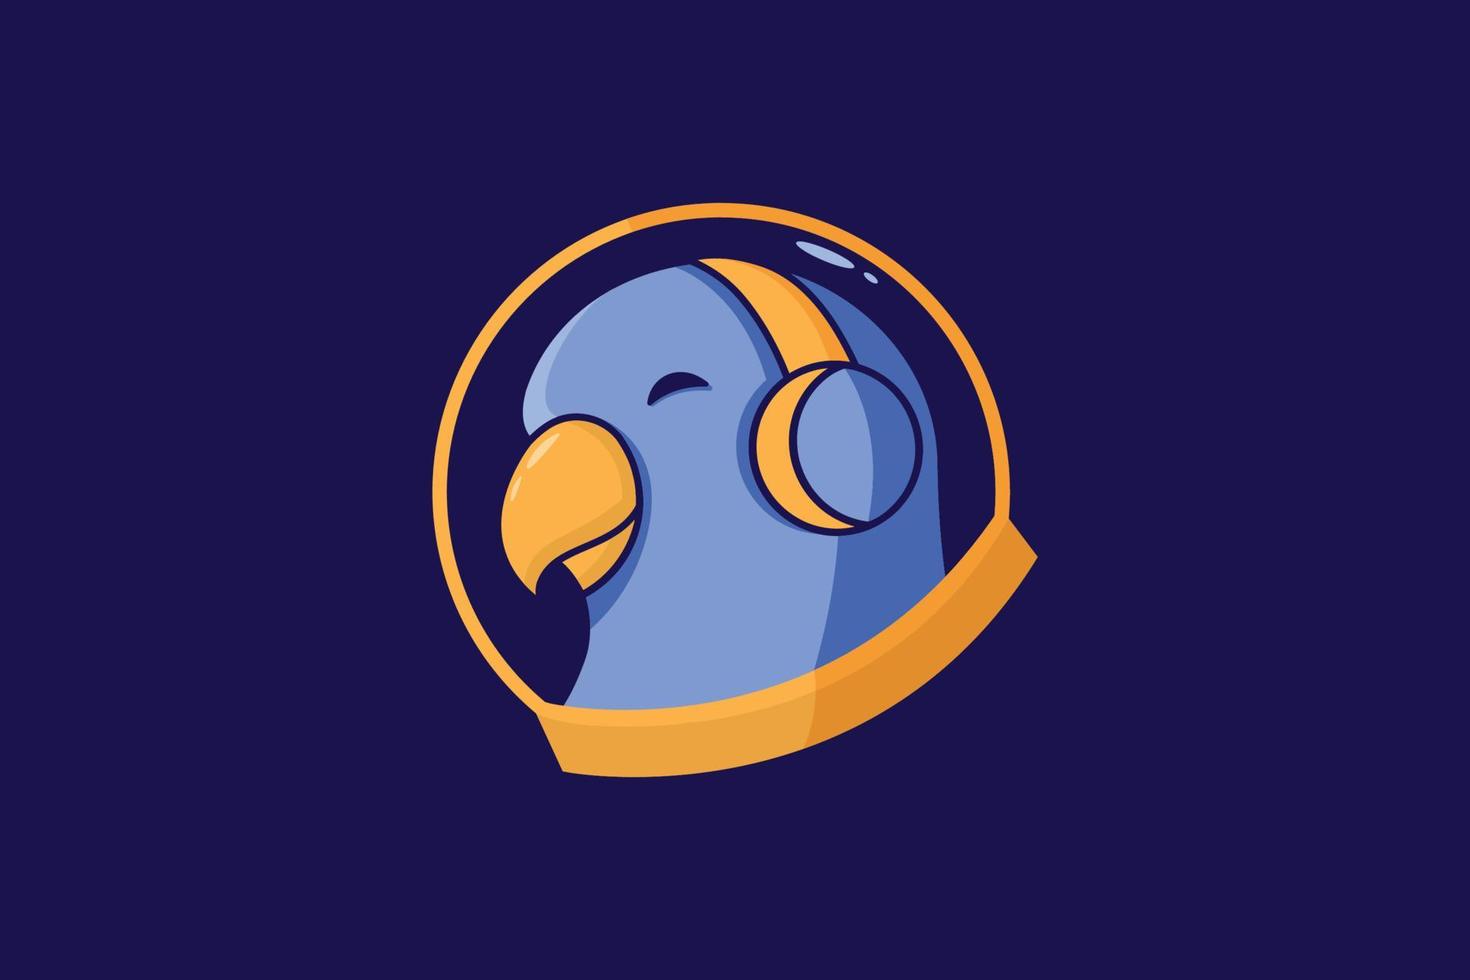 ilustrasi astronot burung beo yang sedan mendengarkan musik, dengan latar belakang berwarna biru. vetor